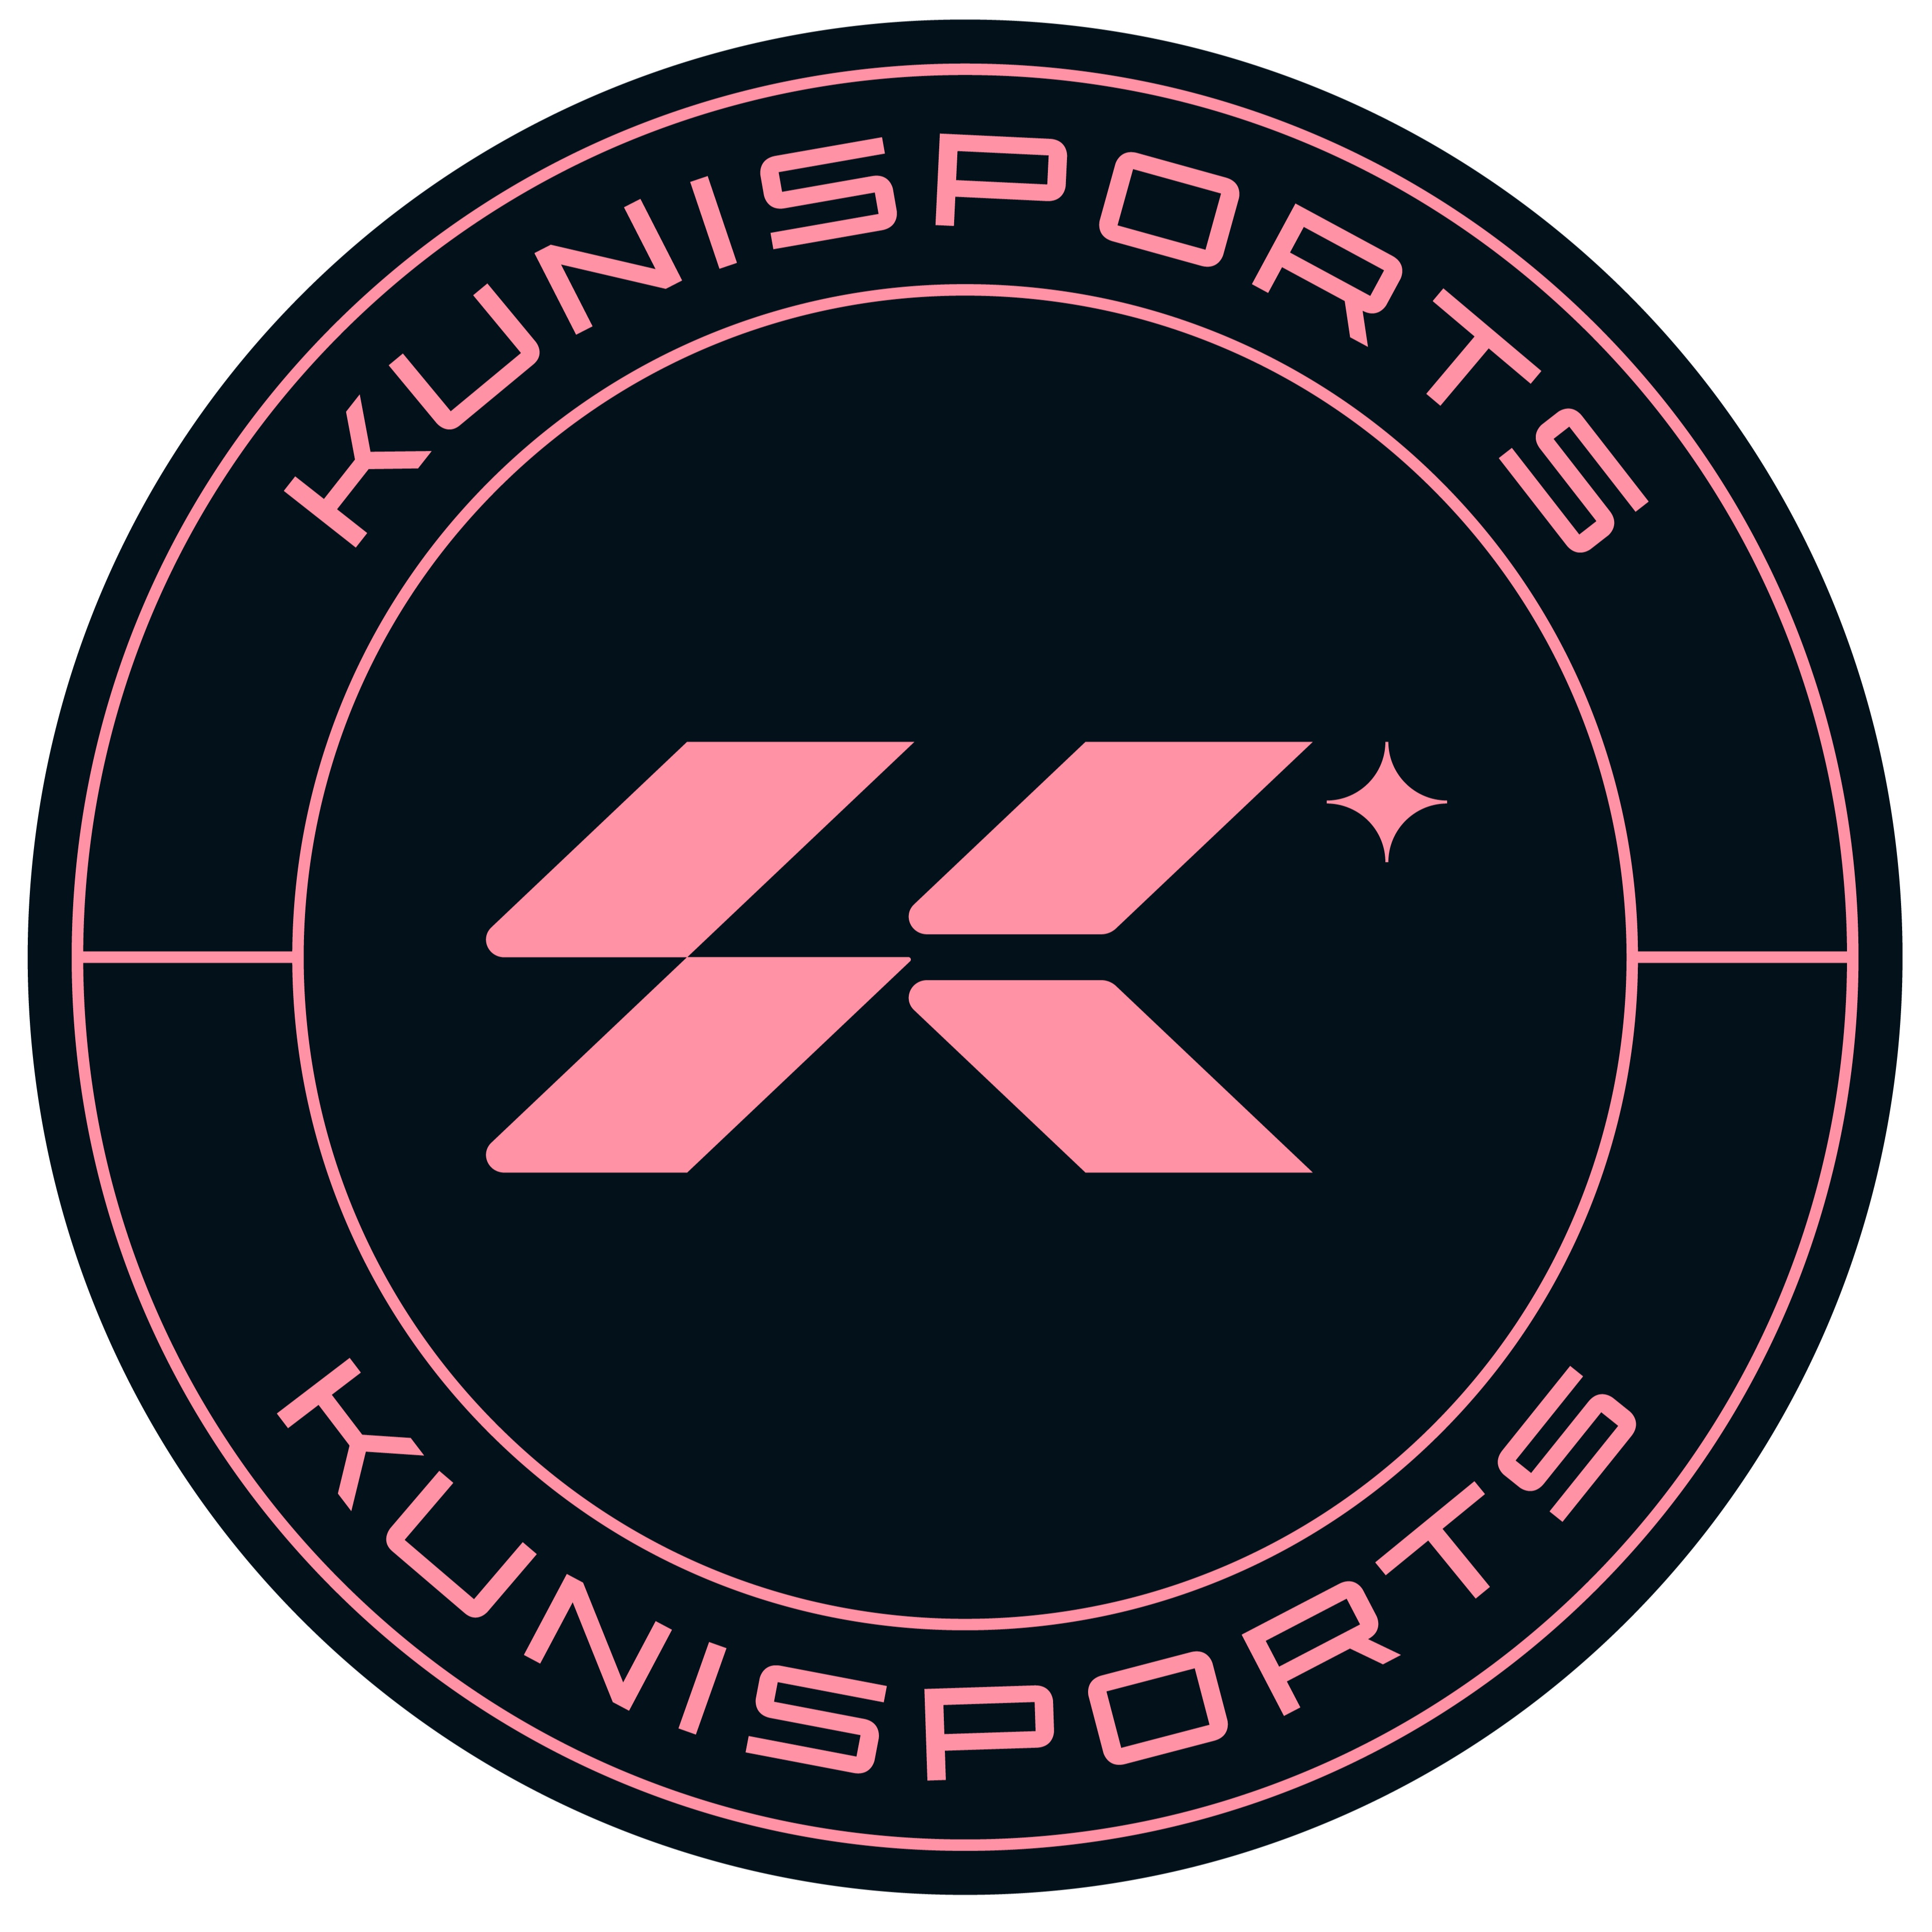 Kunisports Sub 12